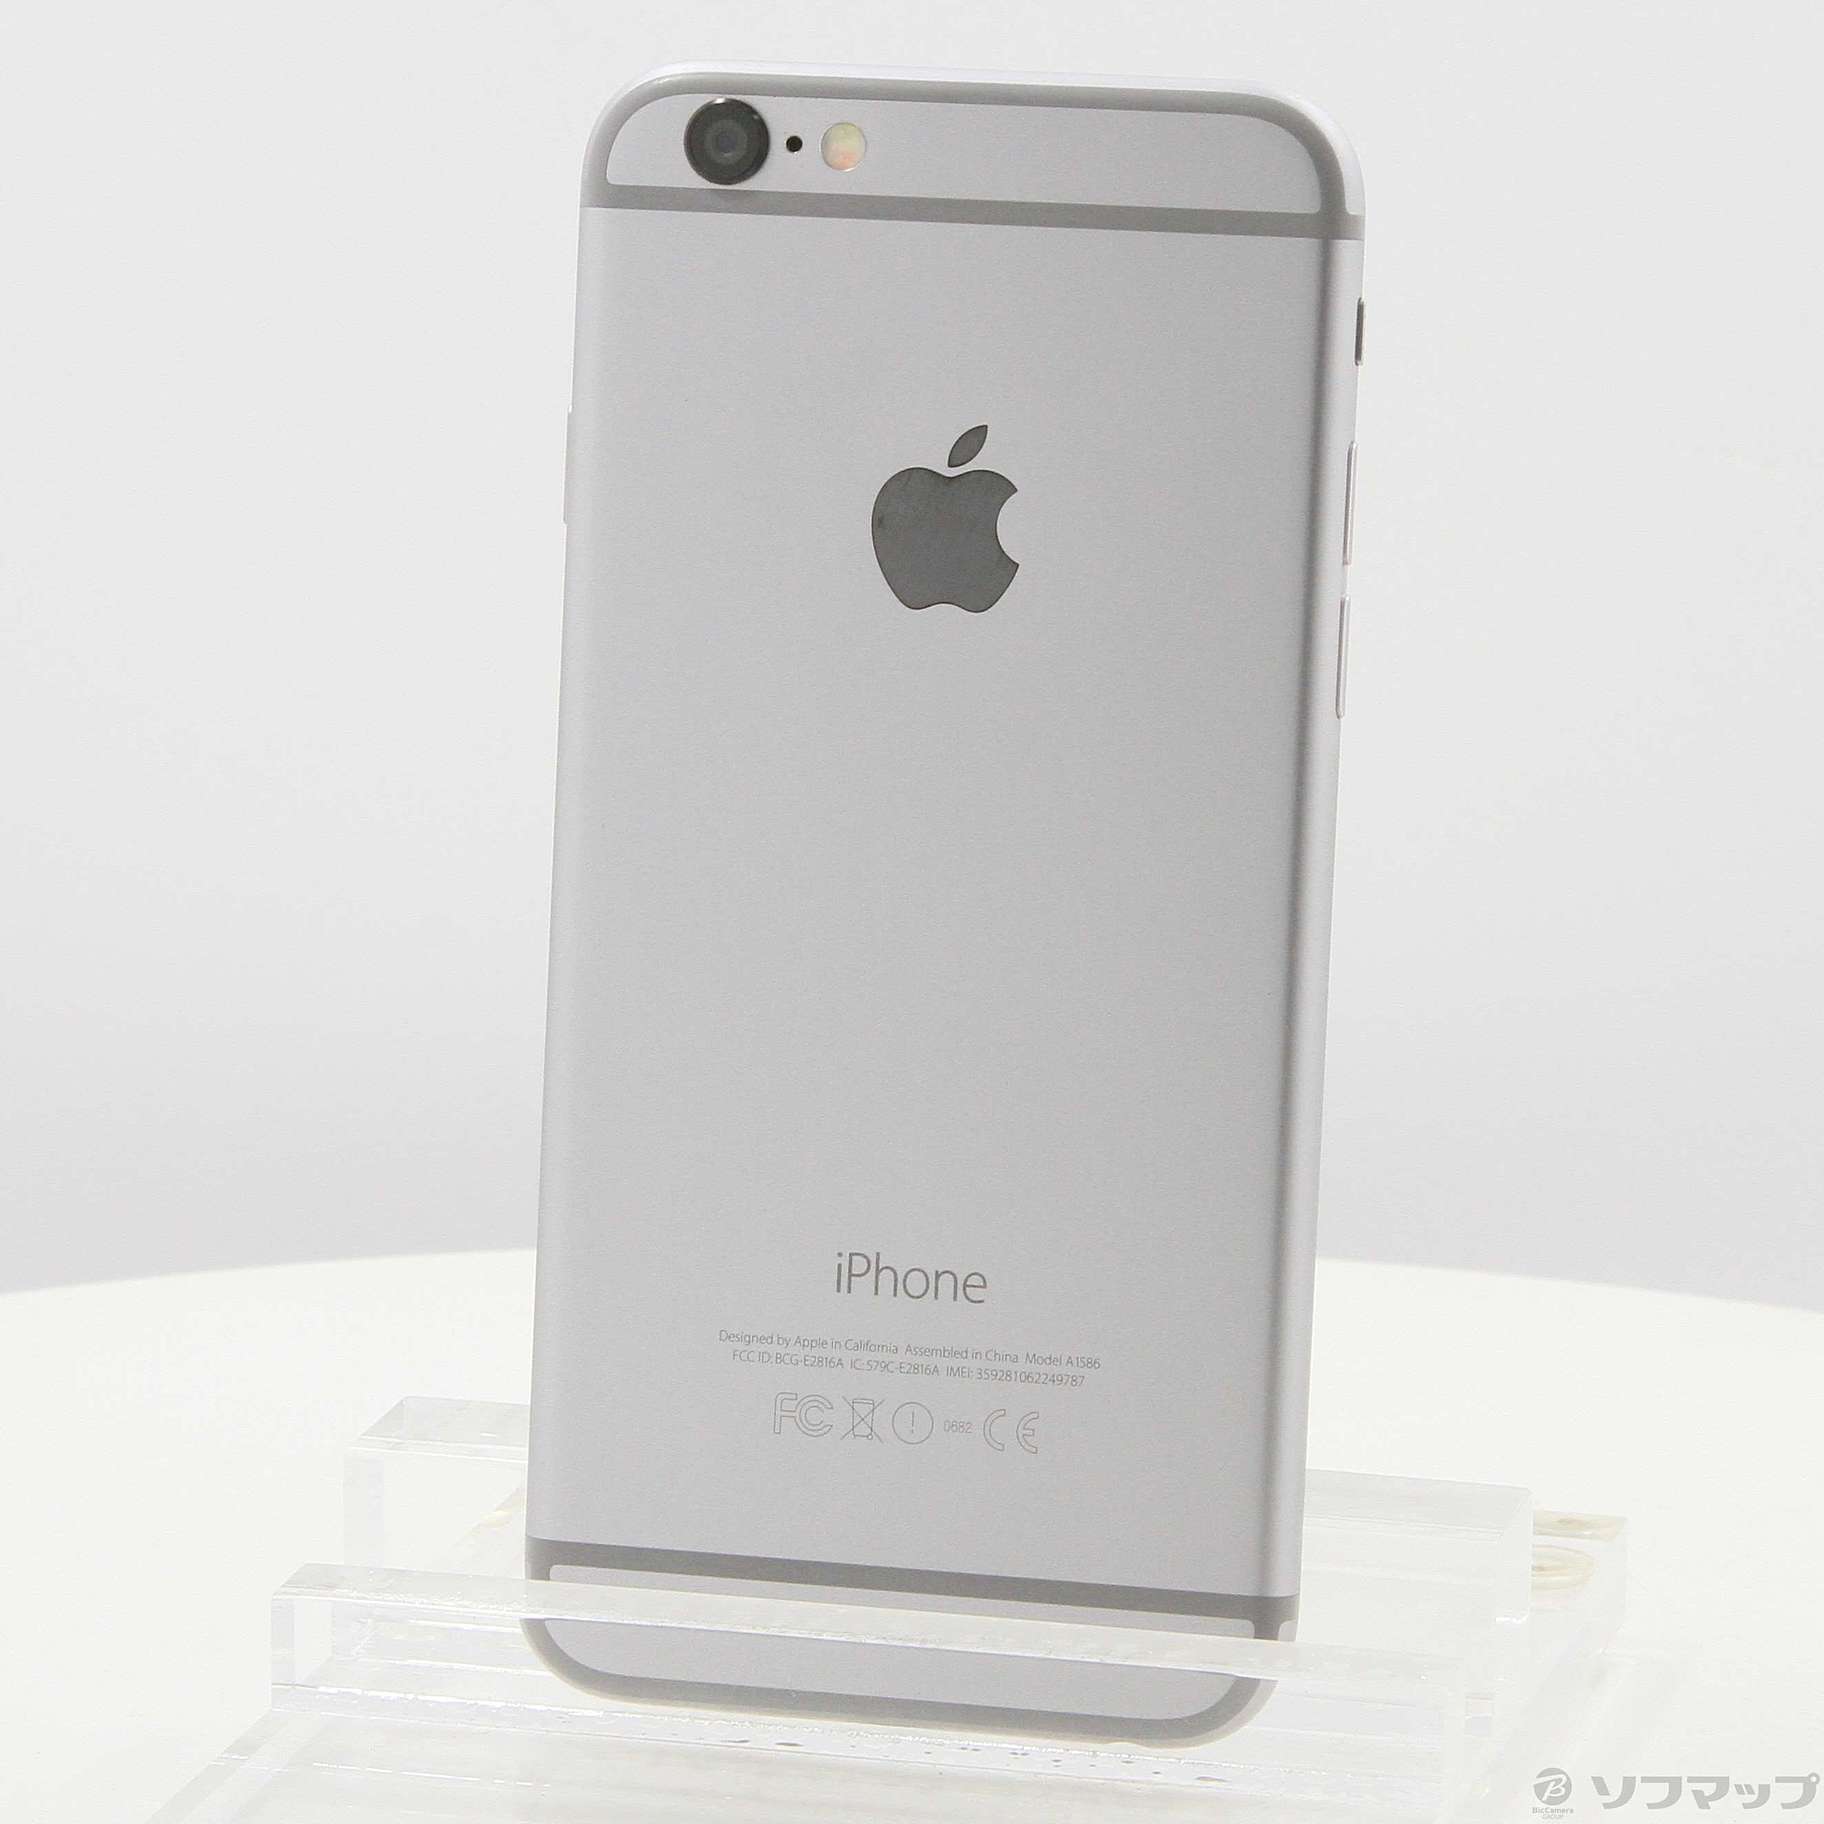 iPhone 6 silver 64GB